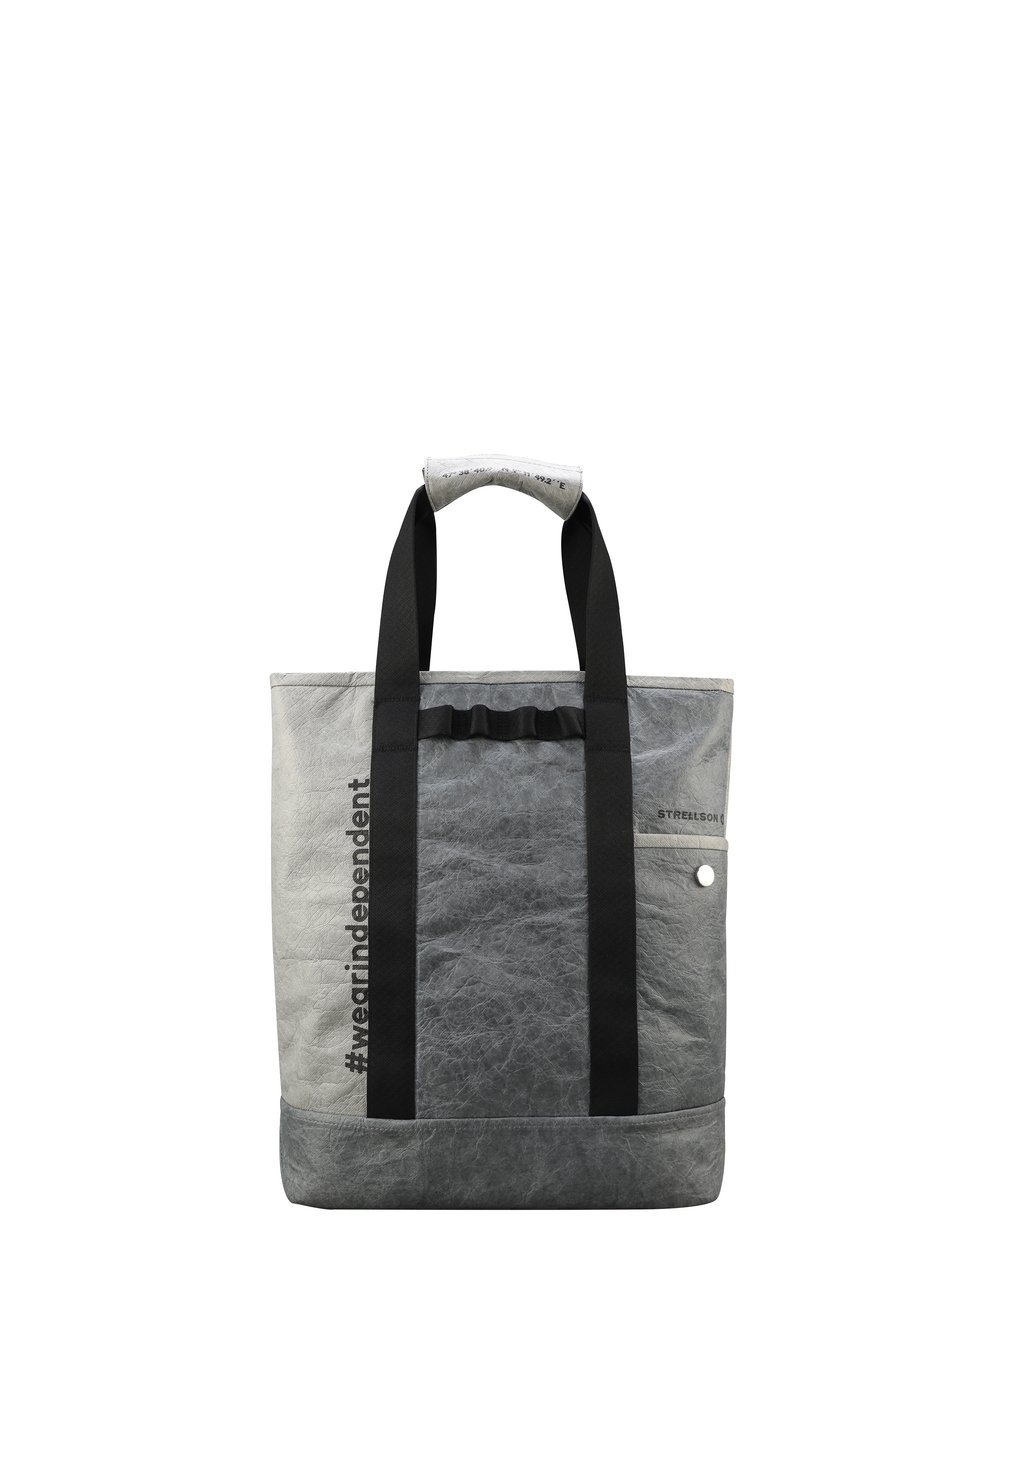 Сумка Strellson Premium, цвет darkgrey сумка через плечо strellson premium цвет darkgrey